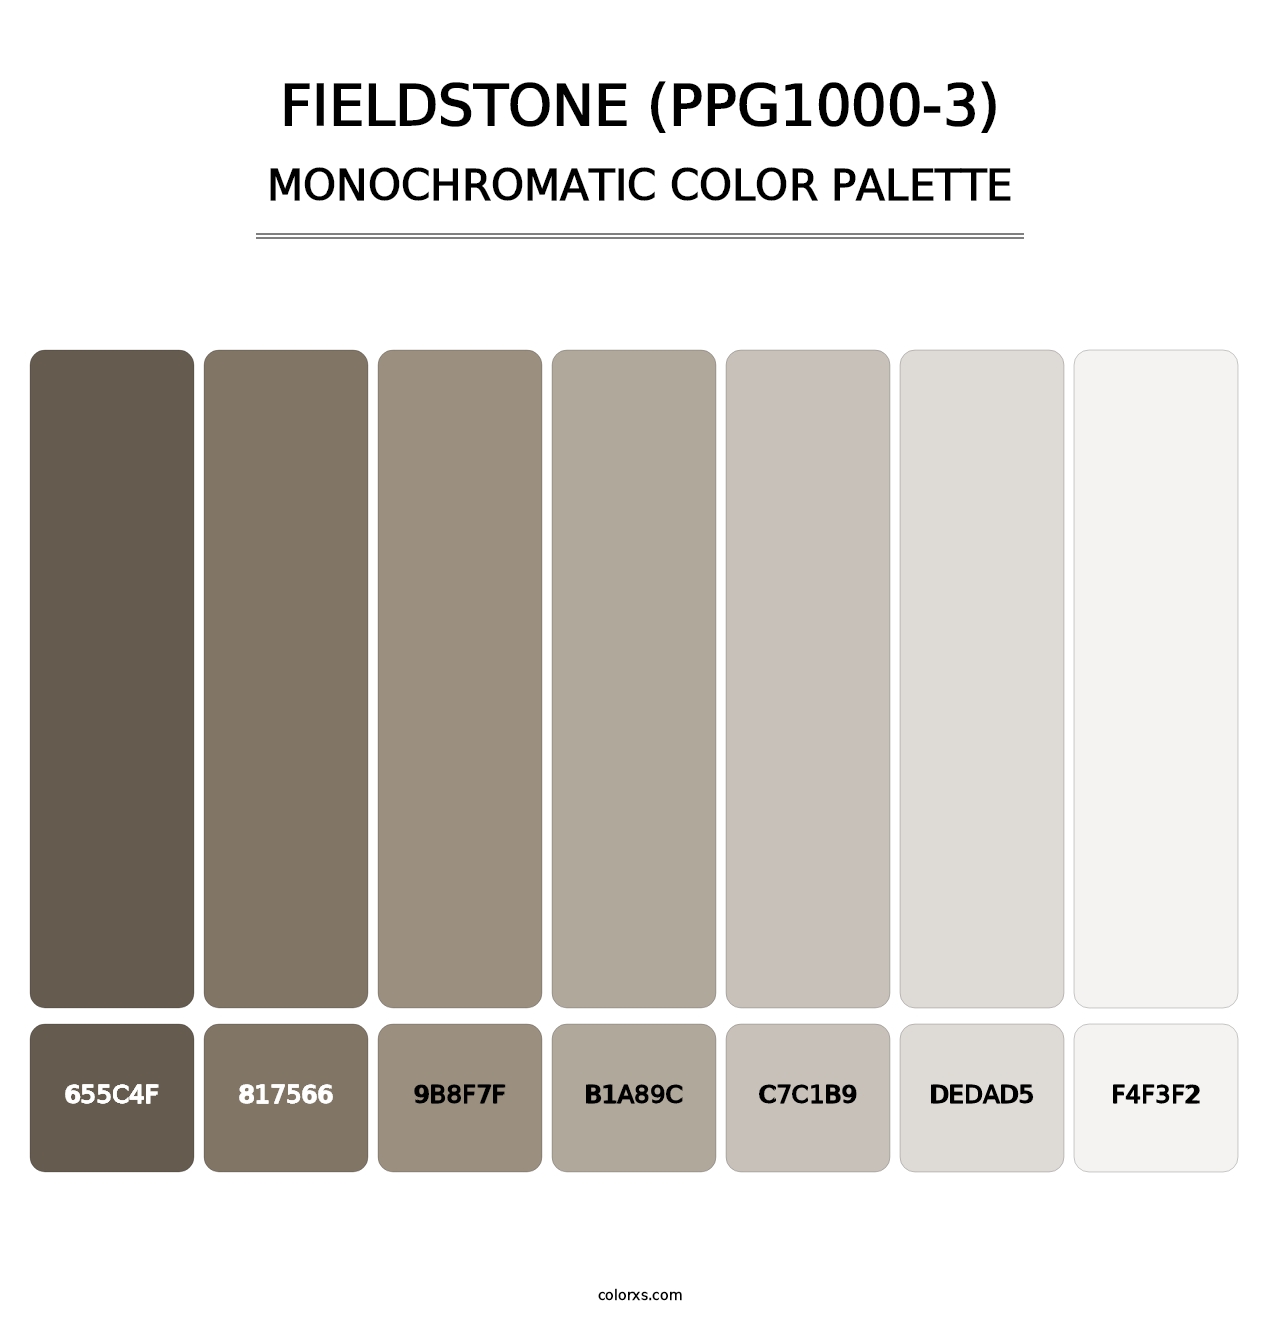 Fieldstone (PPG1000-3) - Monochromatic Color Palette